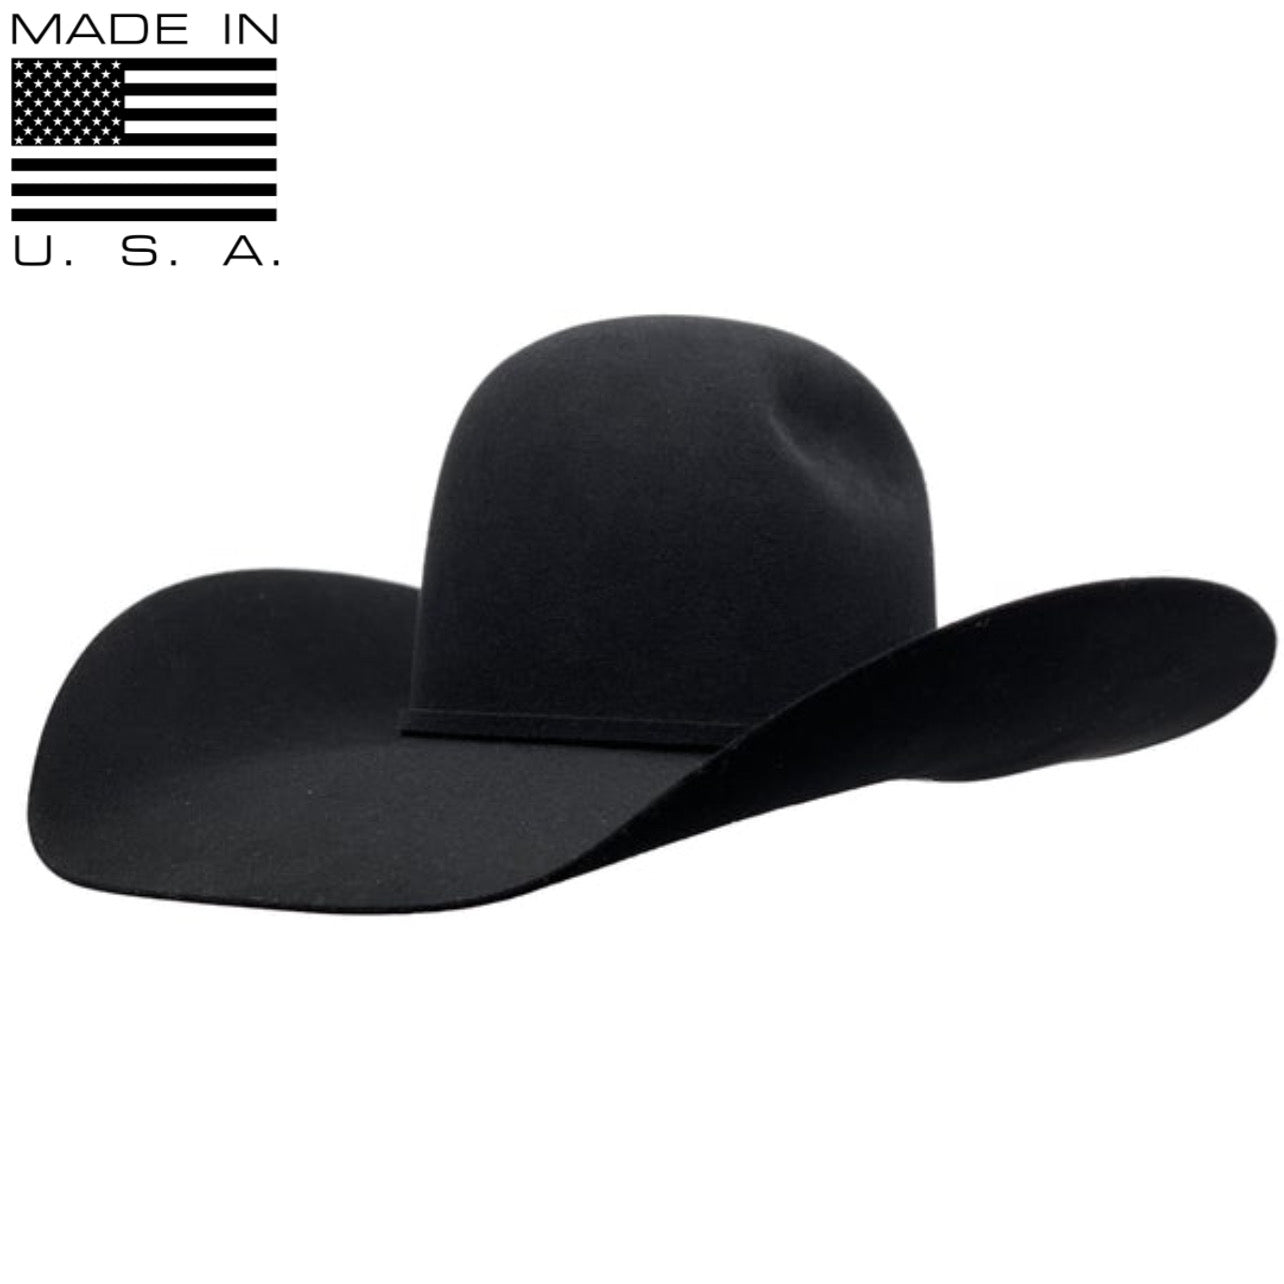 black sun hats